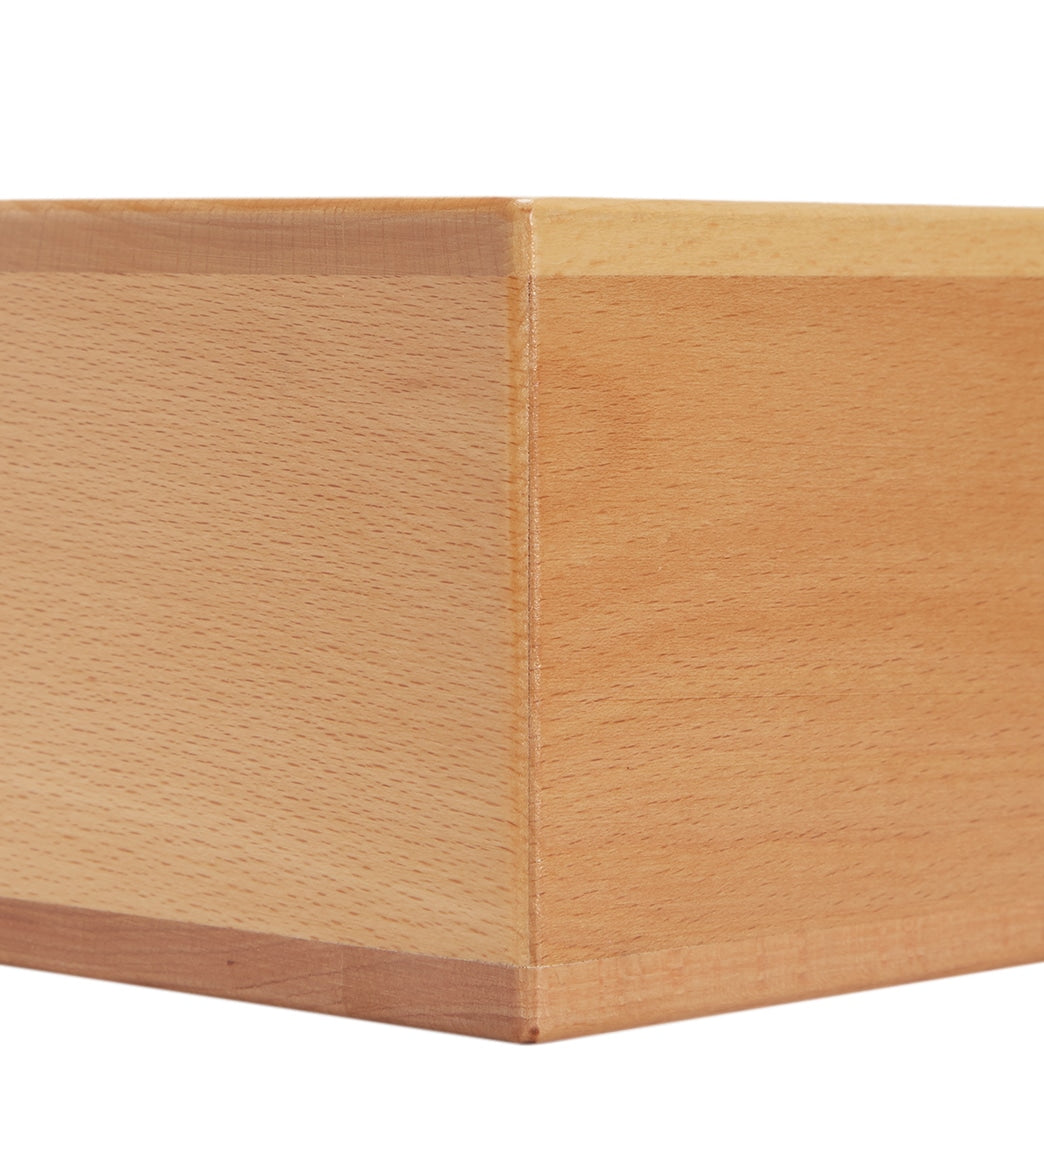 4 Inch Wood Yoga Block